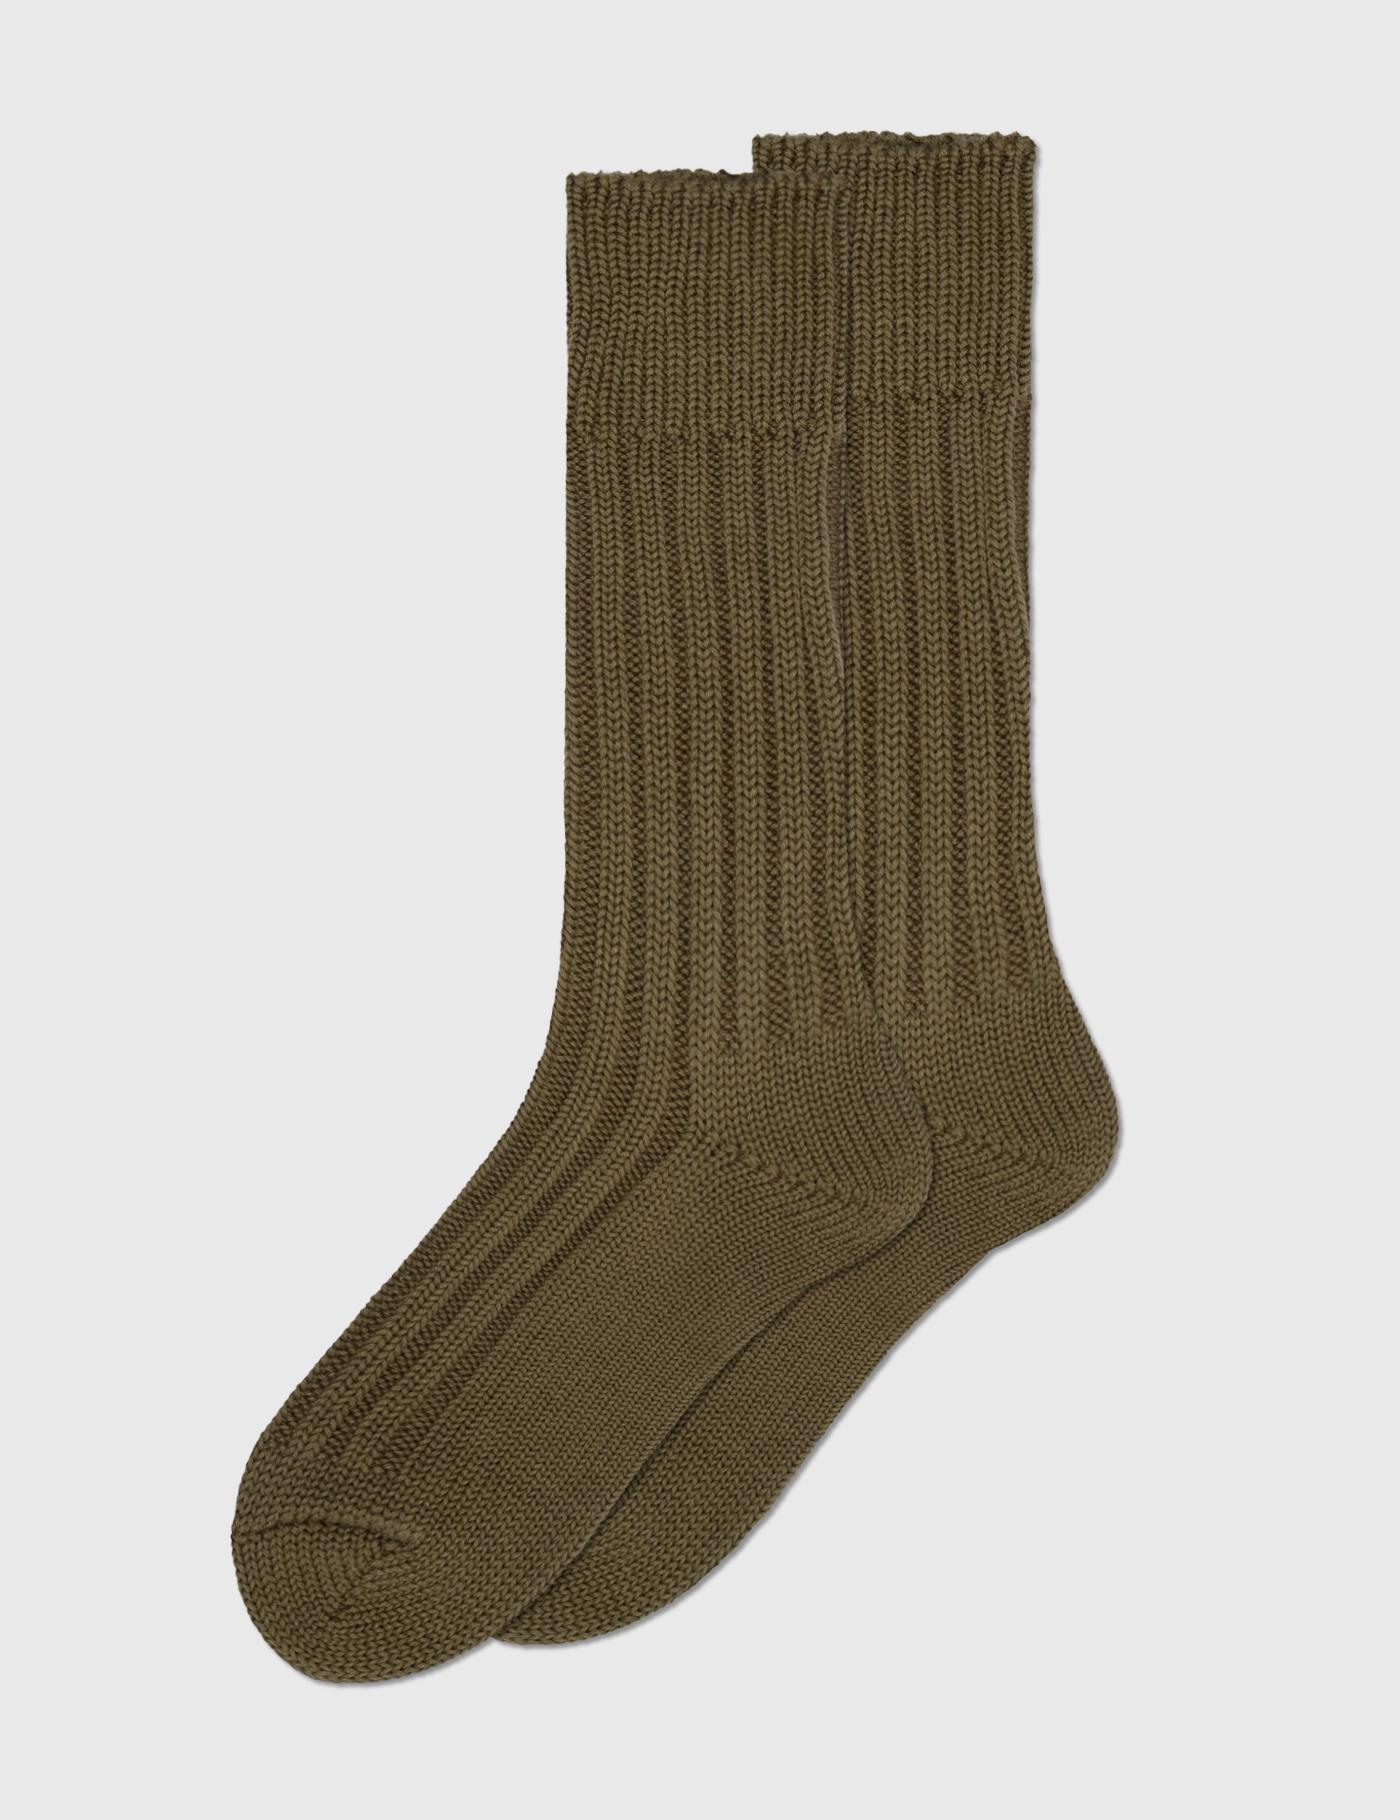 Cased Heavyweight Plain Socks by DECKA